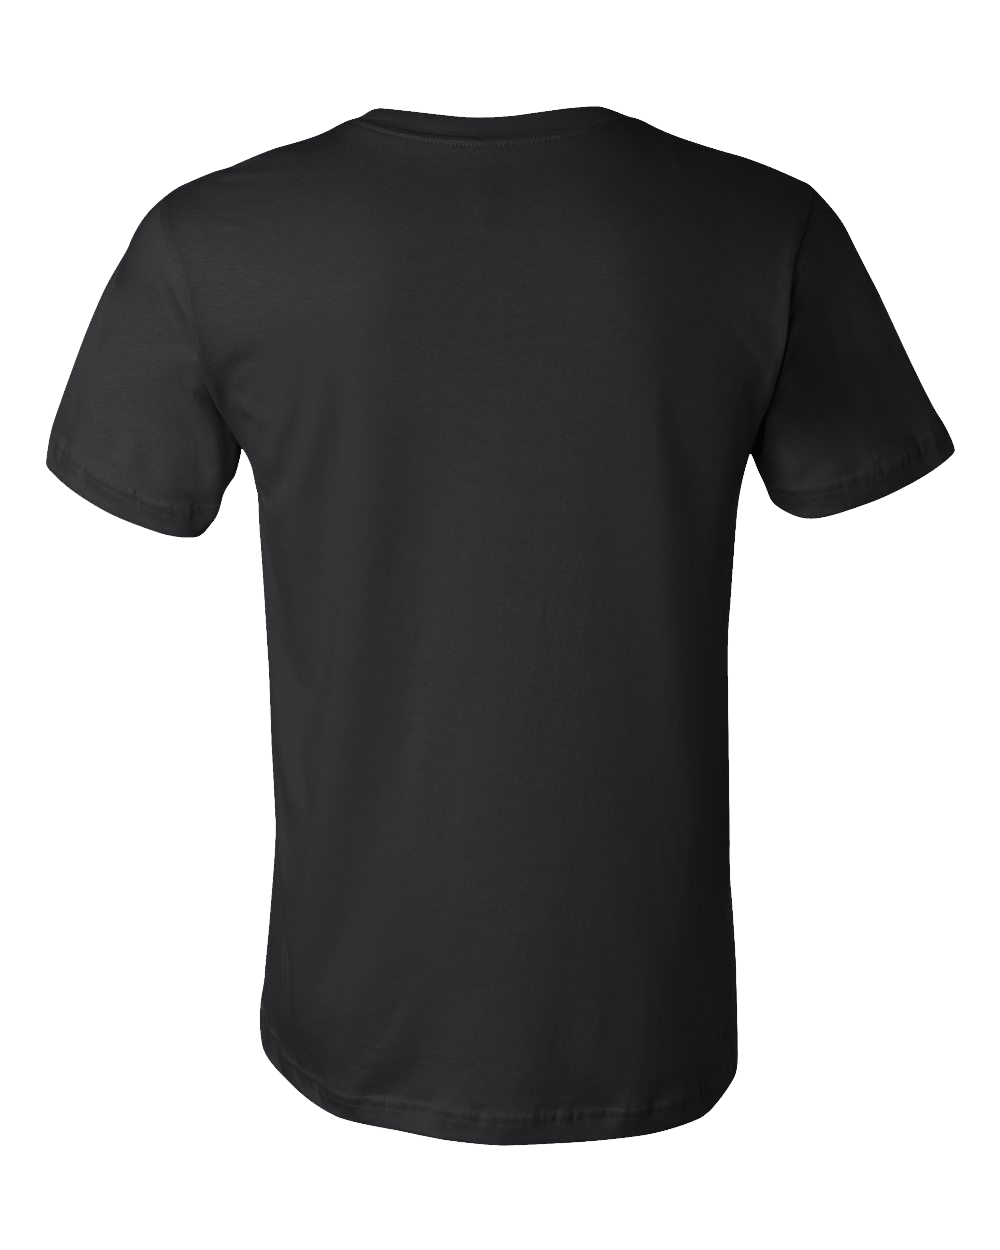 Standard Black Melrose, MA | Retro, Vintage Style Massachusetts Pride  T-shirt